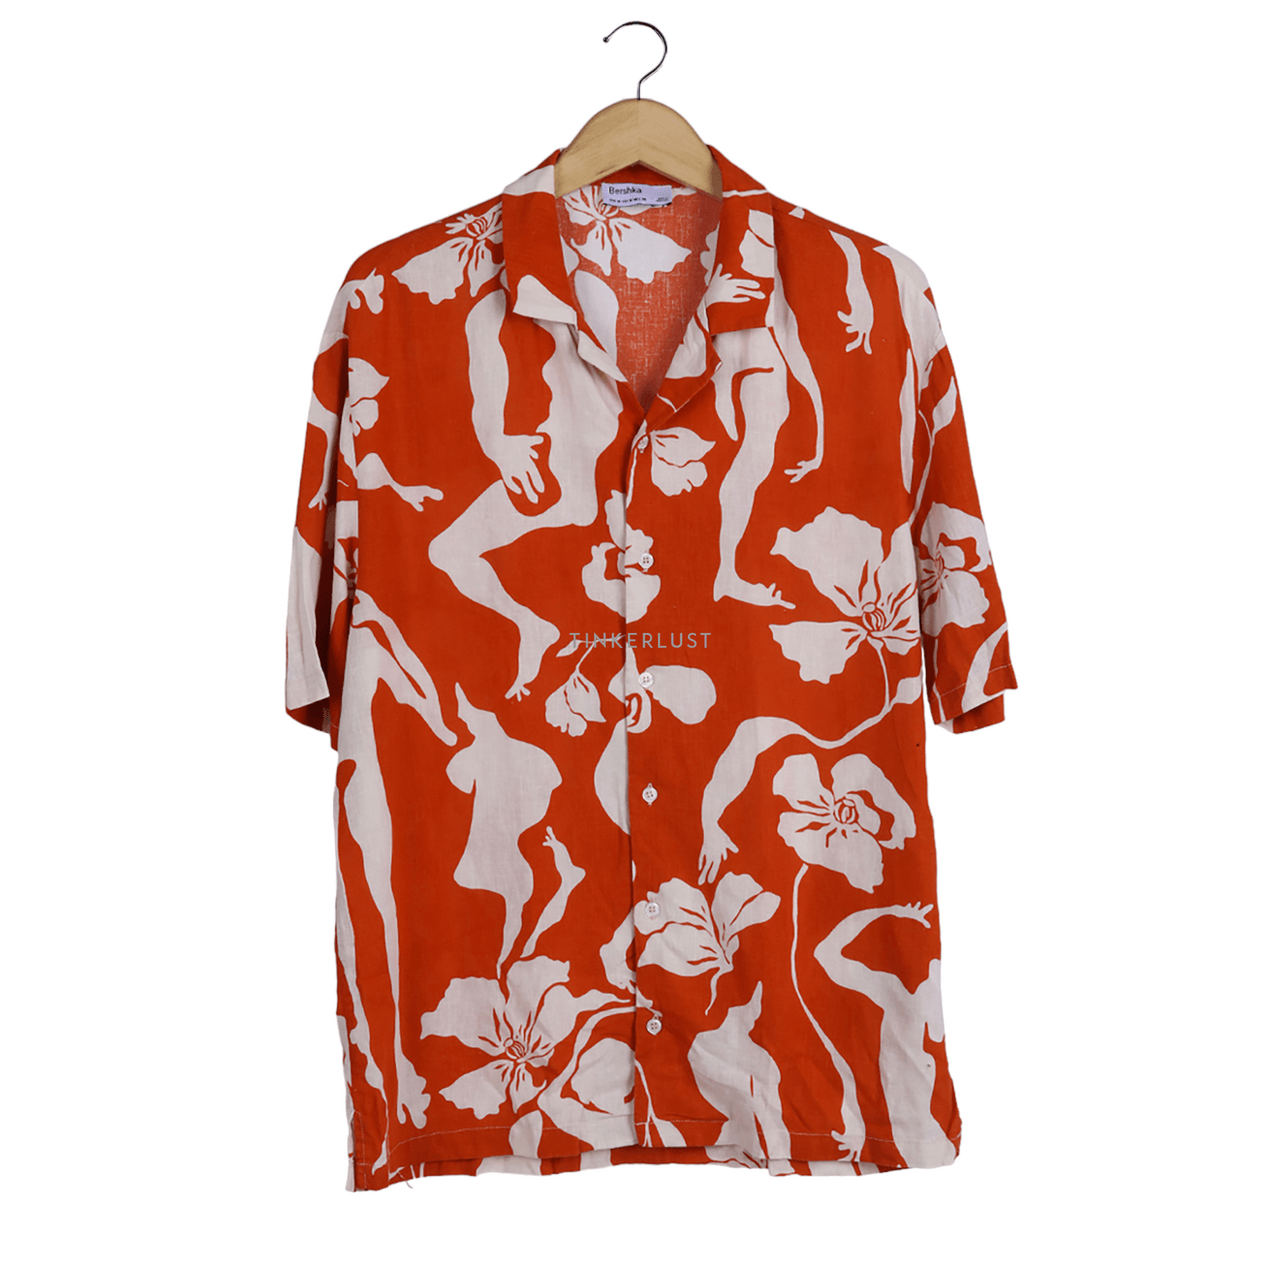 Bershka Orange & Cream Floral Shirt